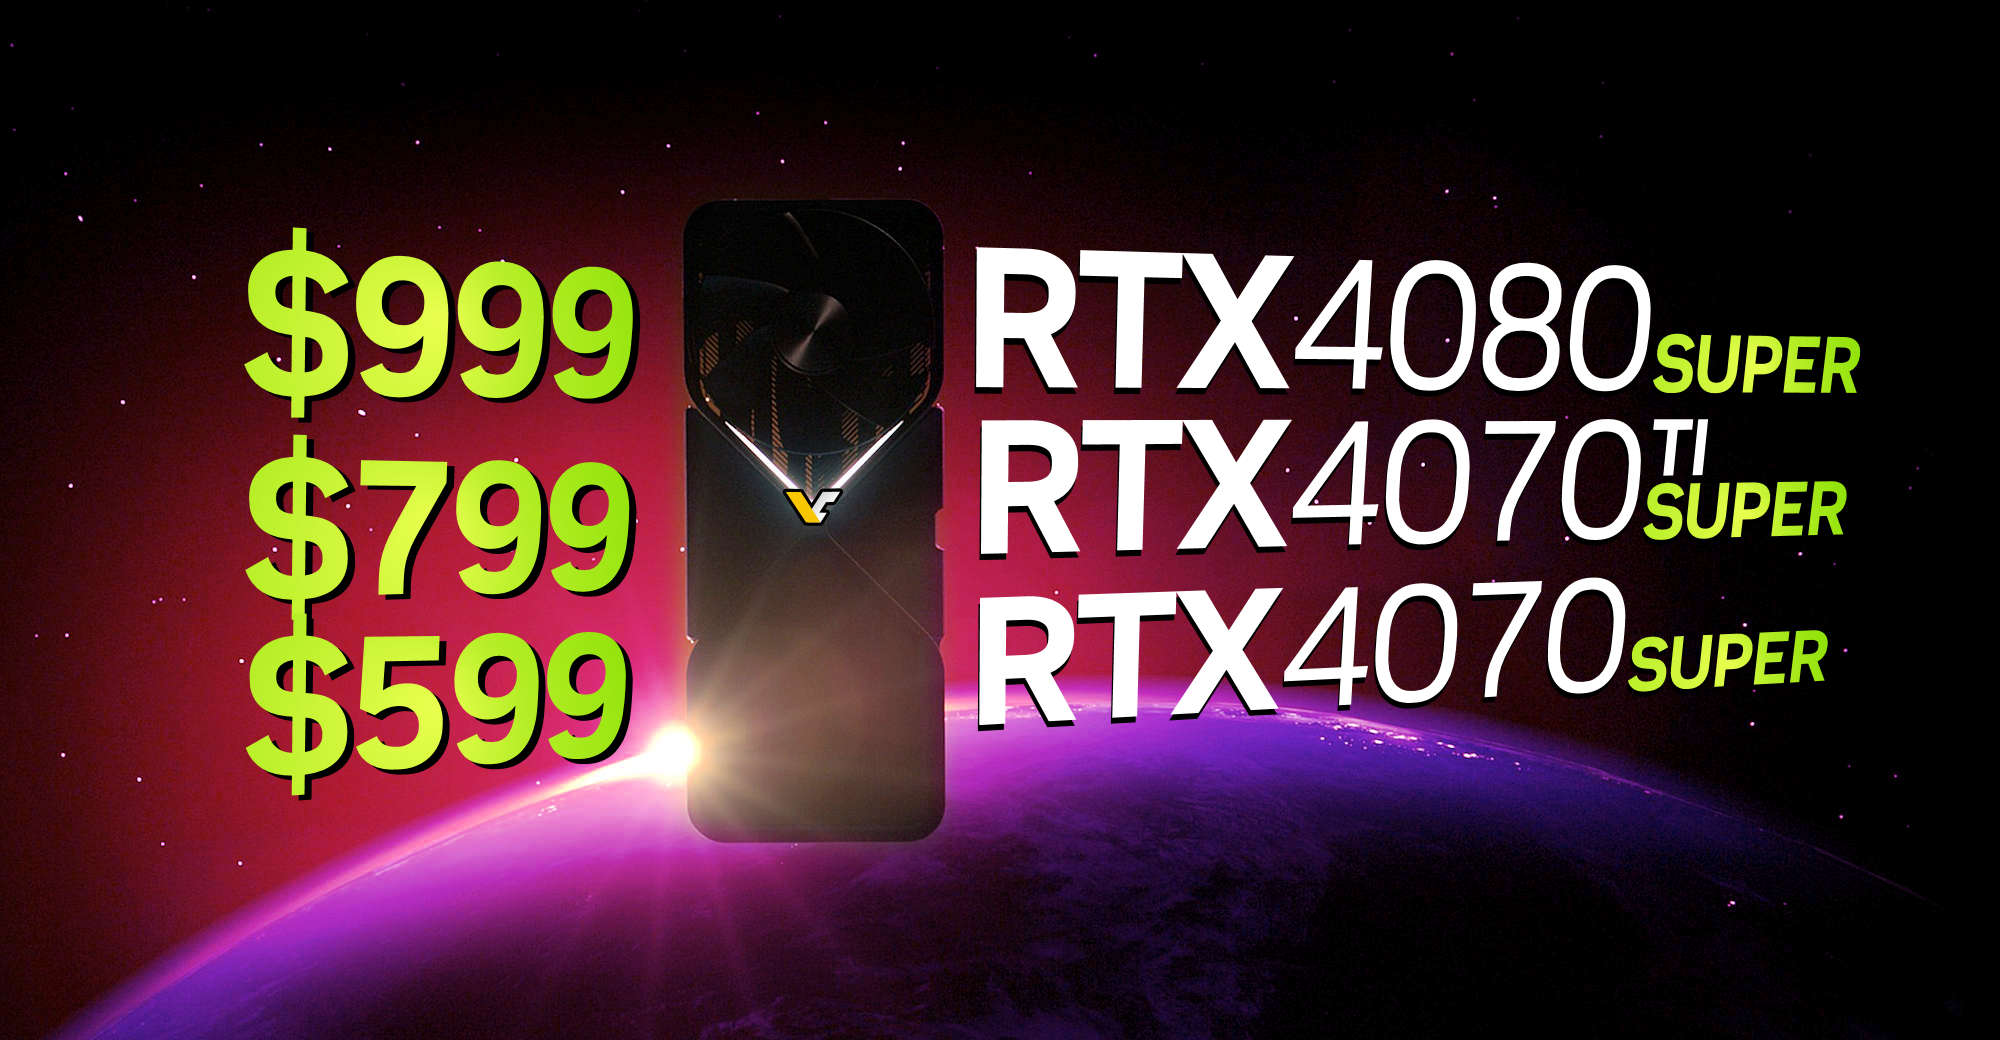 NVIDIA RTX 4080 SUPER supostamente custa US$ 999, RTX 4070 Ti/4070 SUPER custa US$ 799/US$ 599